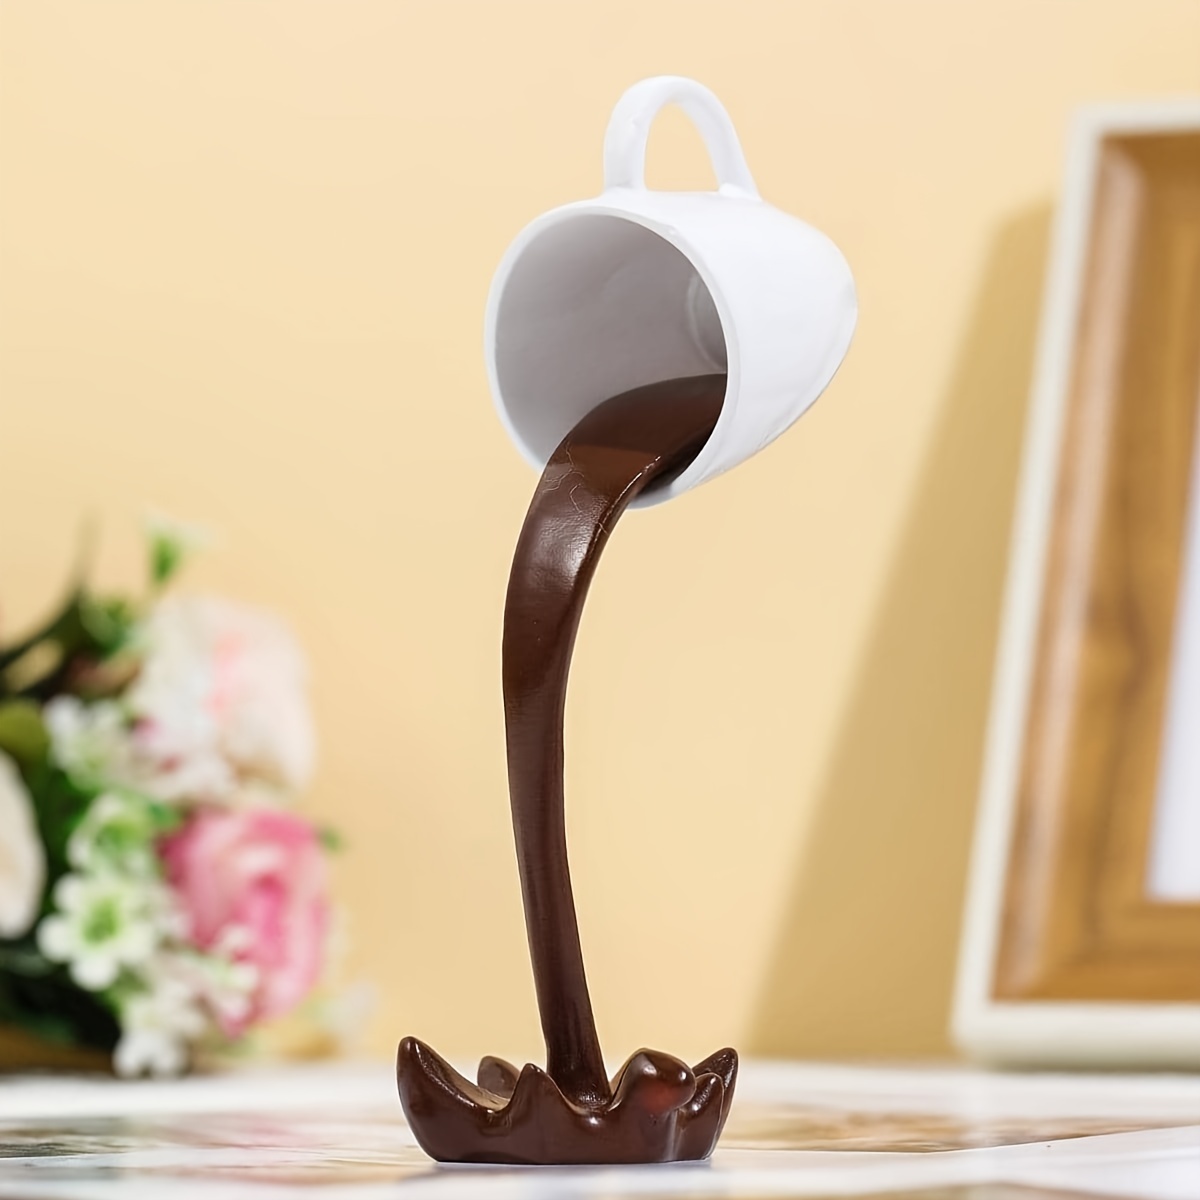 3D Art Floating Coffee Cup Sculpture Pouring Liquid Splash Mug